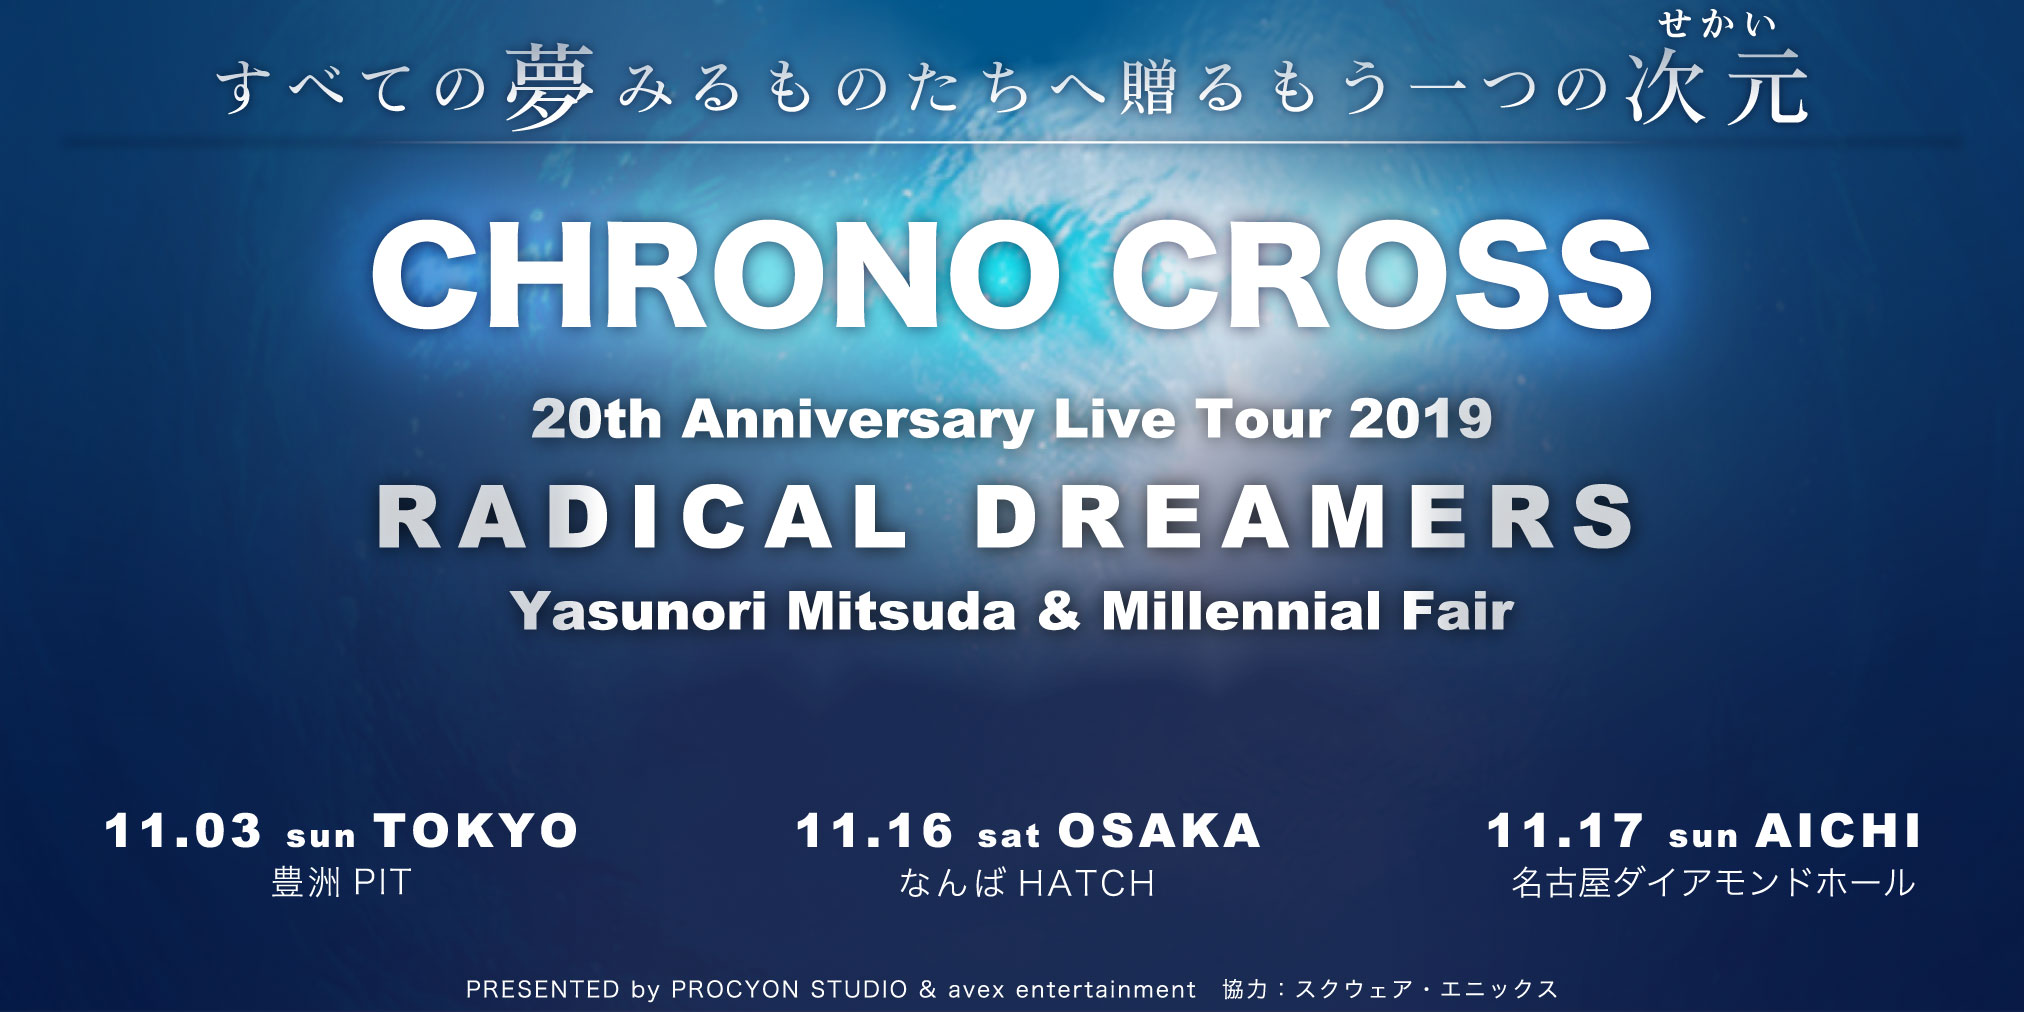 CHRONO CROSS LIVE TOUR 2019